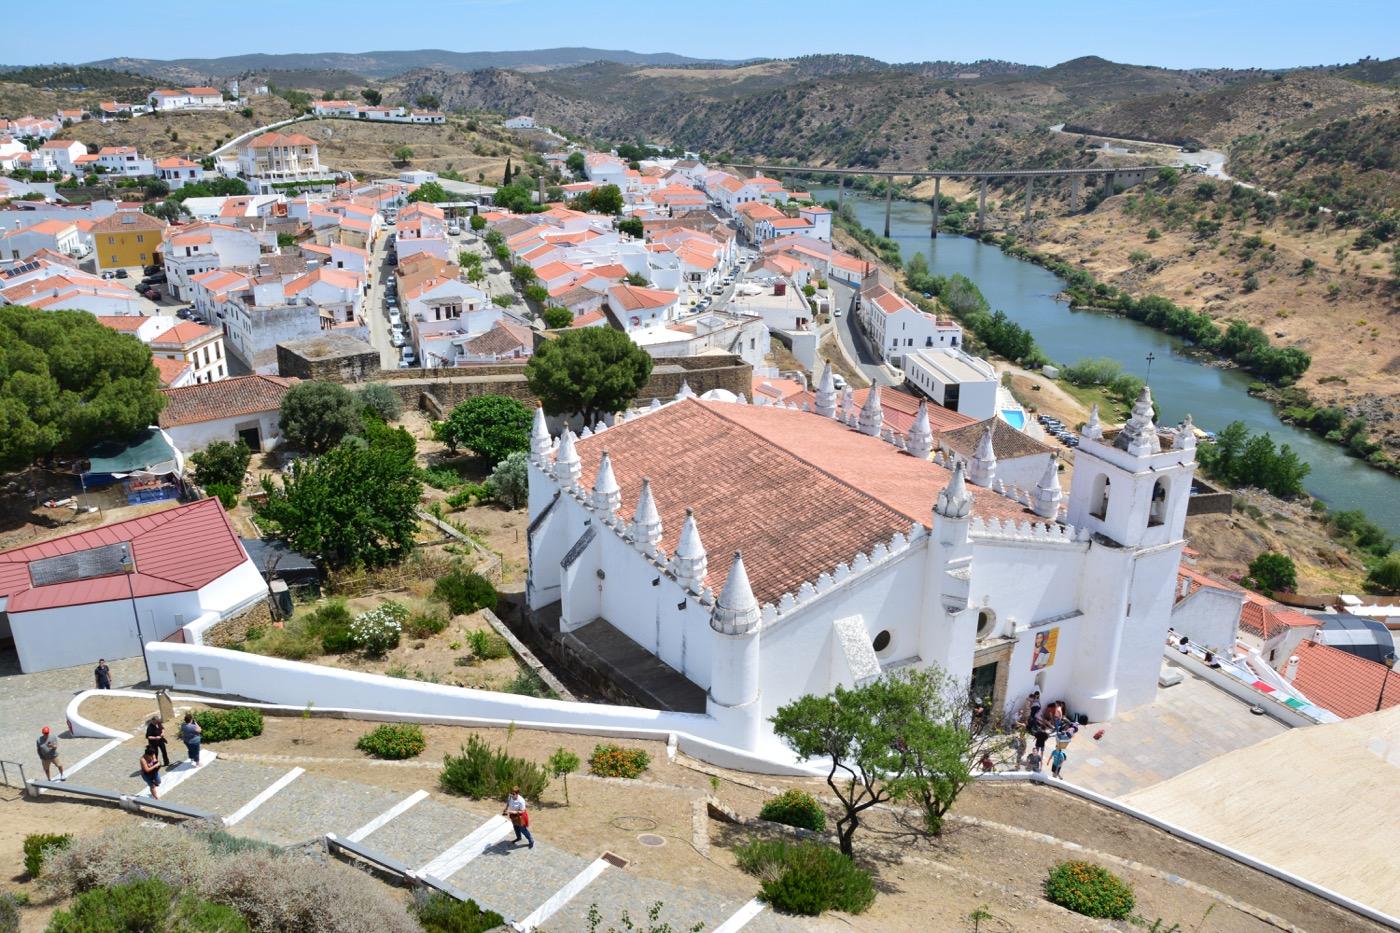 Nossa Senhora da Anunciacao, Gereja dengan Jejak Kejayaan Islam di Portugal